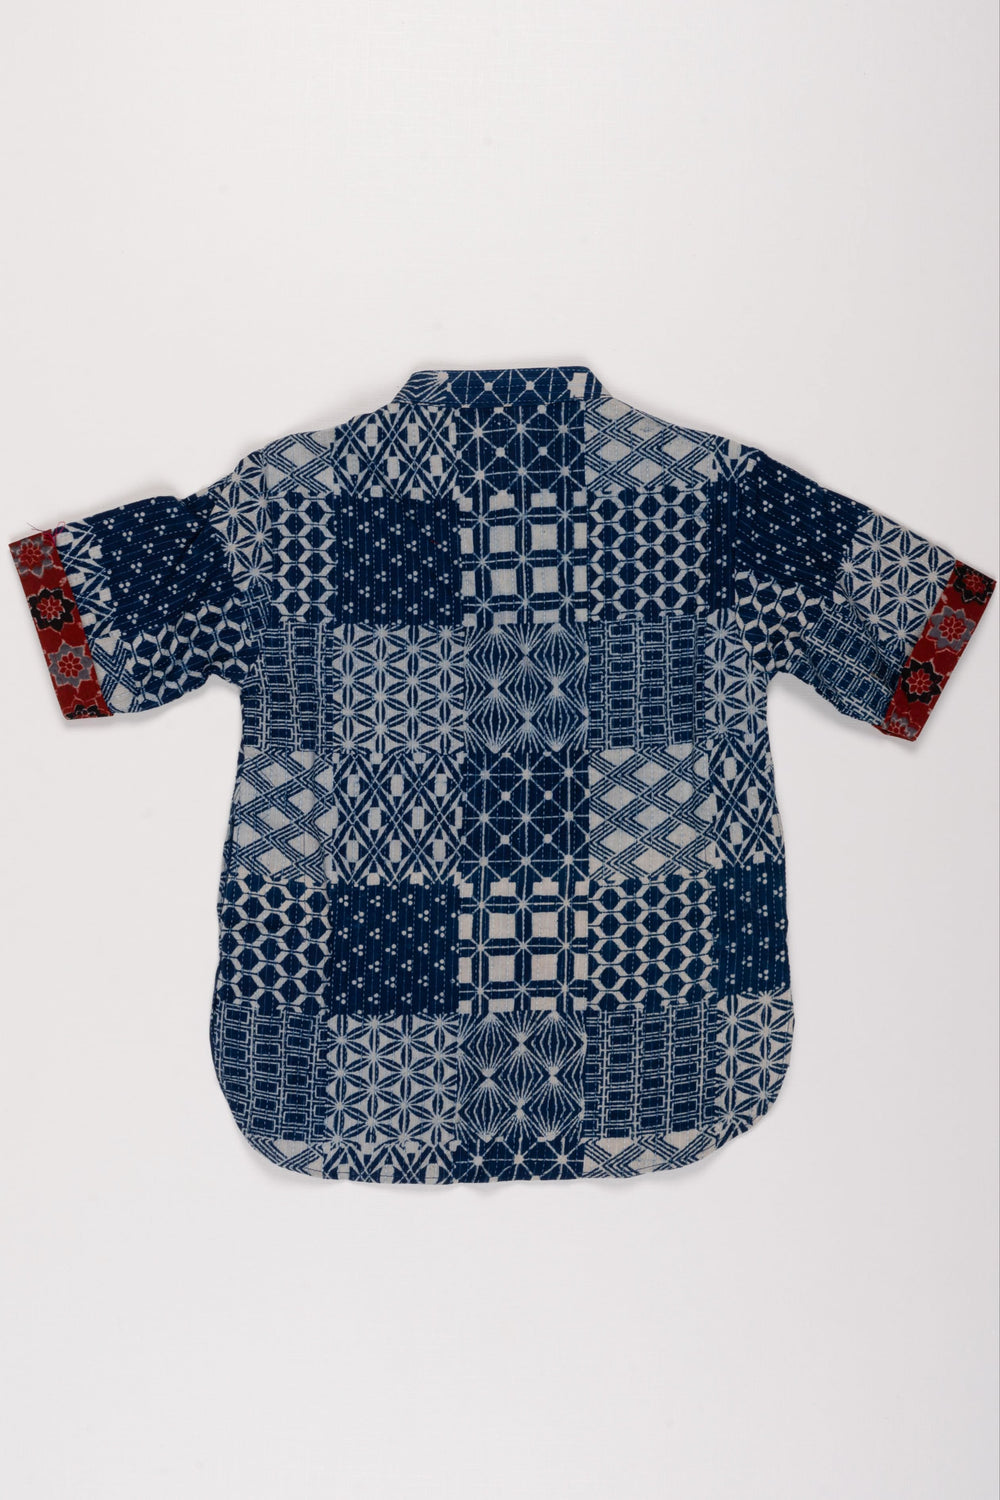 The Nesavu Boys Kurtha Shirt Boys Intricate Geometric Patterned Blue Cotton Shirt with Contrasting Cuff Detail Nesavu Elegant and Stylish Boys Kurta Shirts | Festive and Casual Options Available | The Nesavu